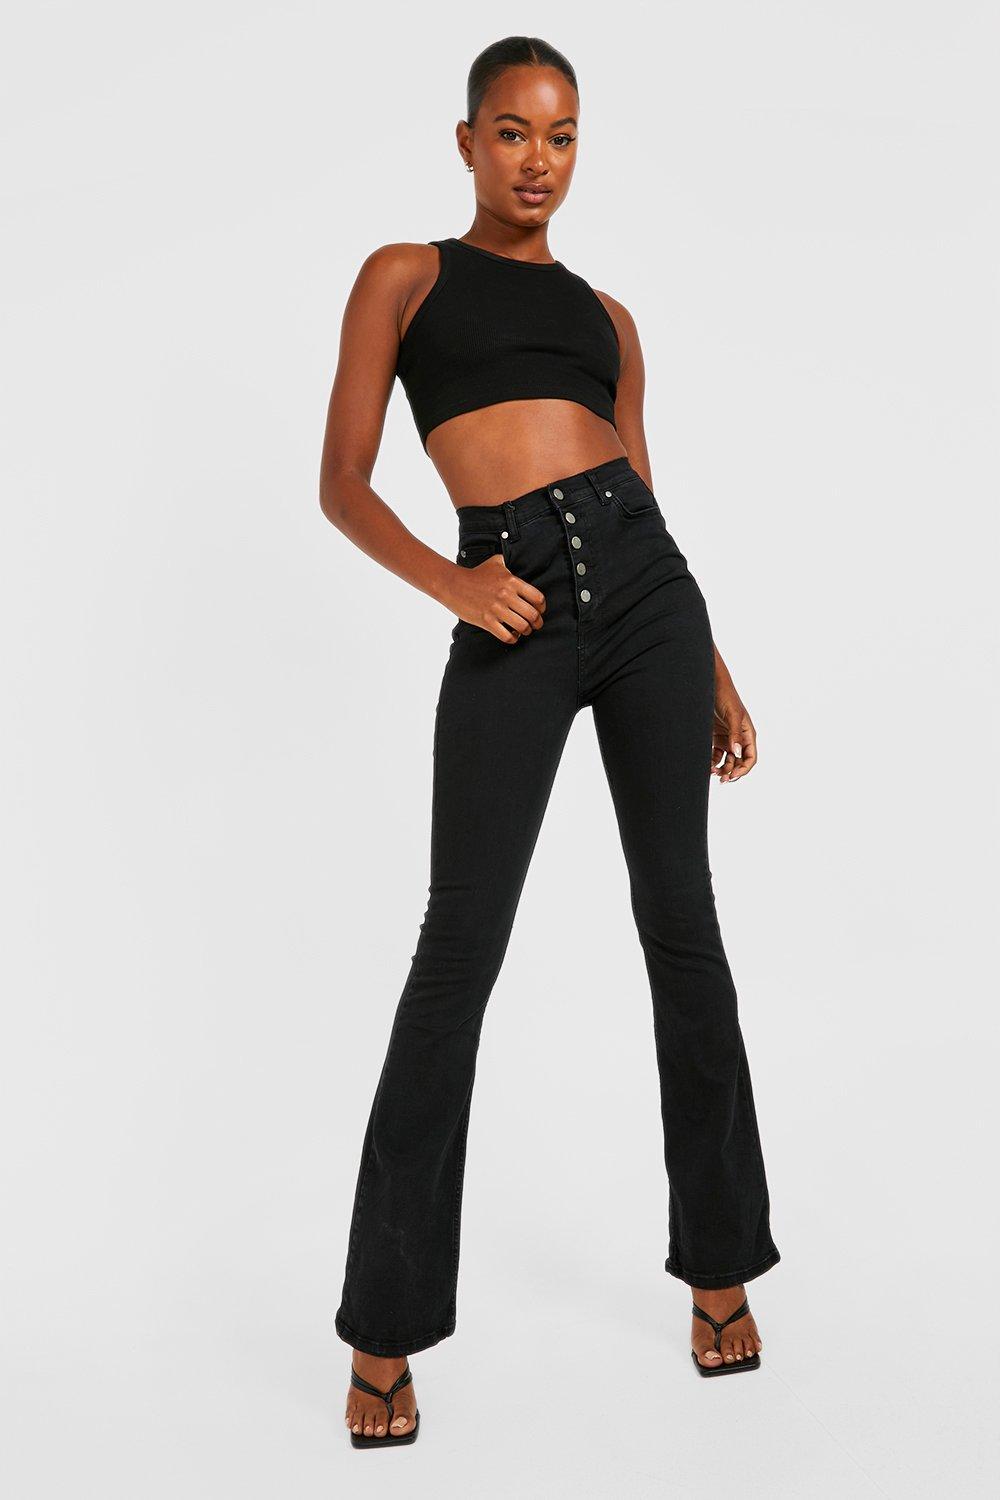 https://media.boohoo.com/i/boohoo/tzz93190_black_xl/female-black-tall-button-front-high-waisted-flared-jeans